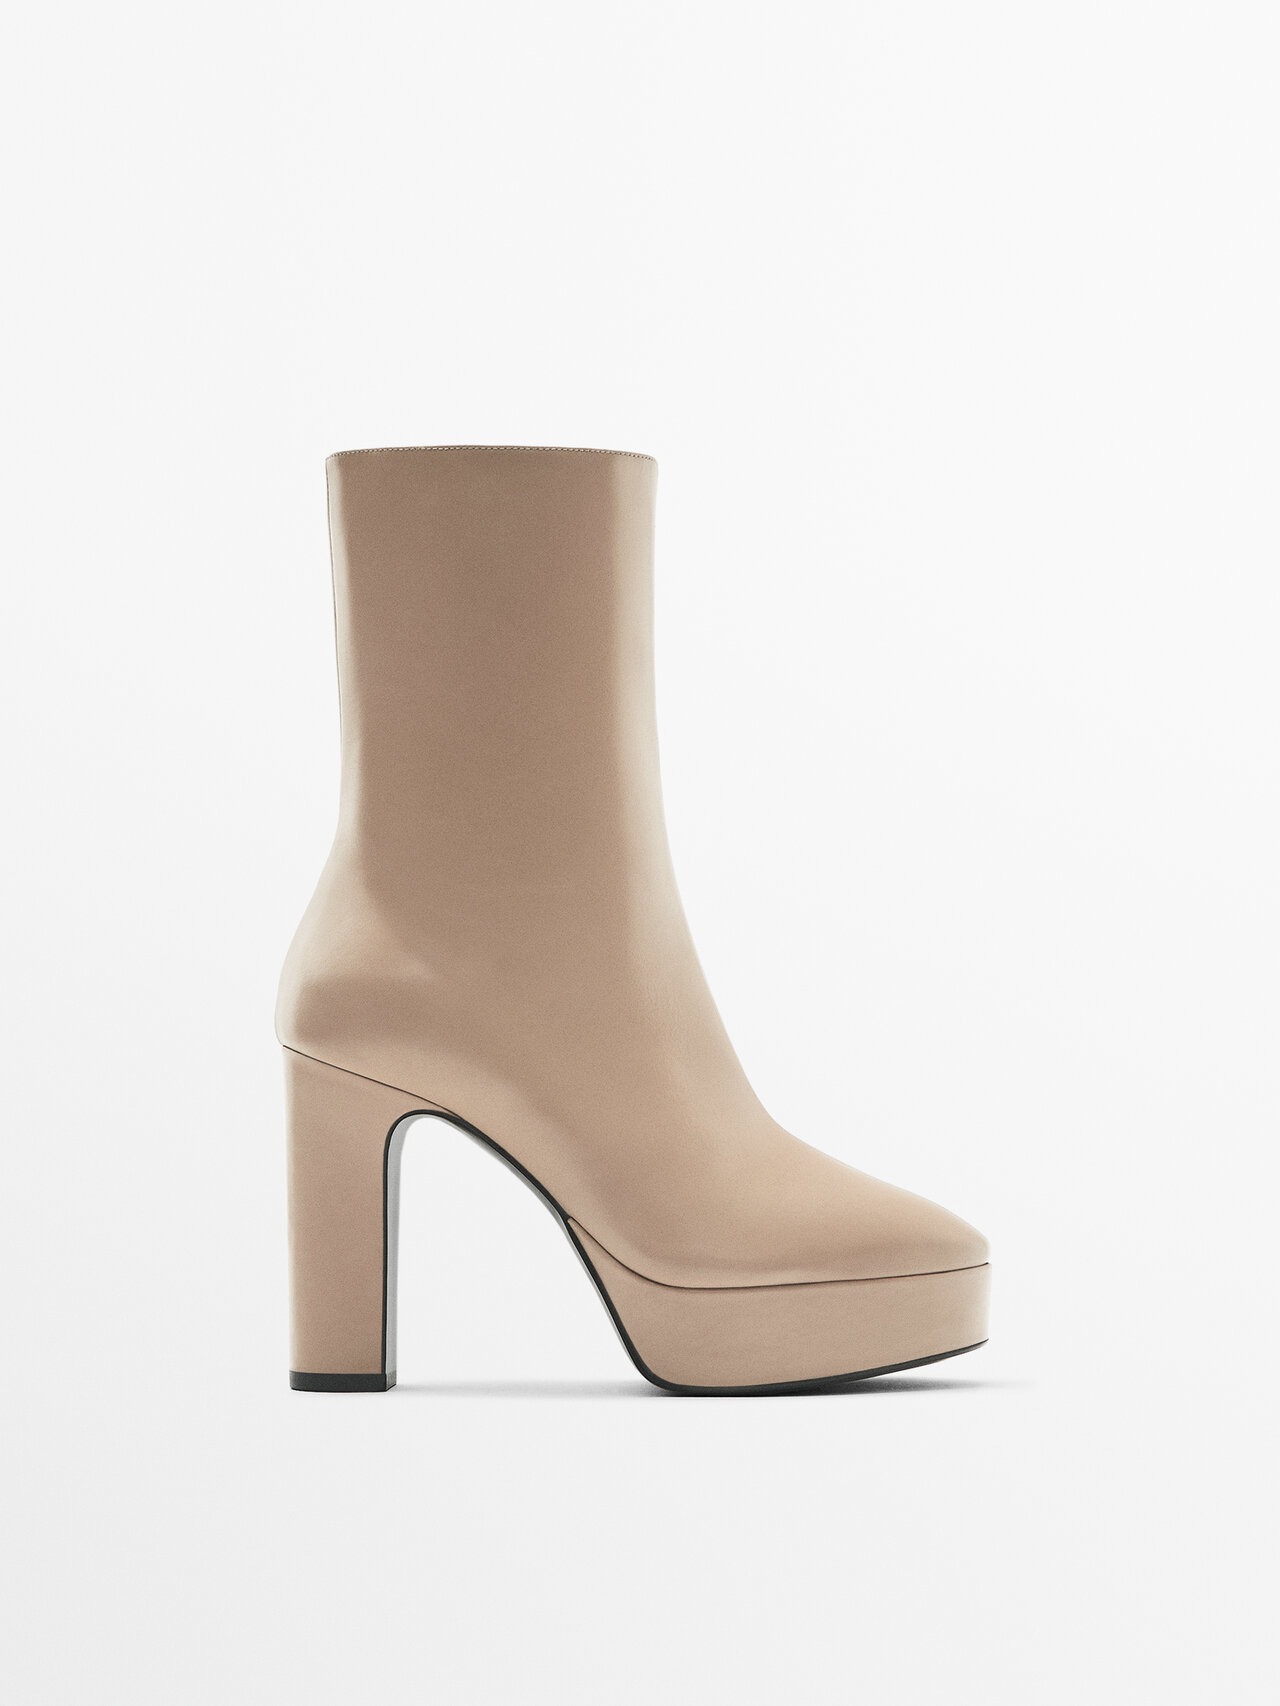 Massimo Dutti Leather Platform Ankle Boots - Studio In Cream